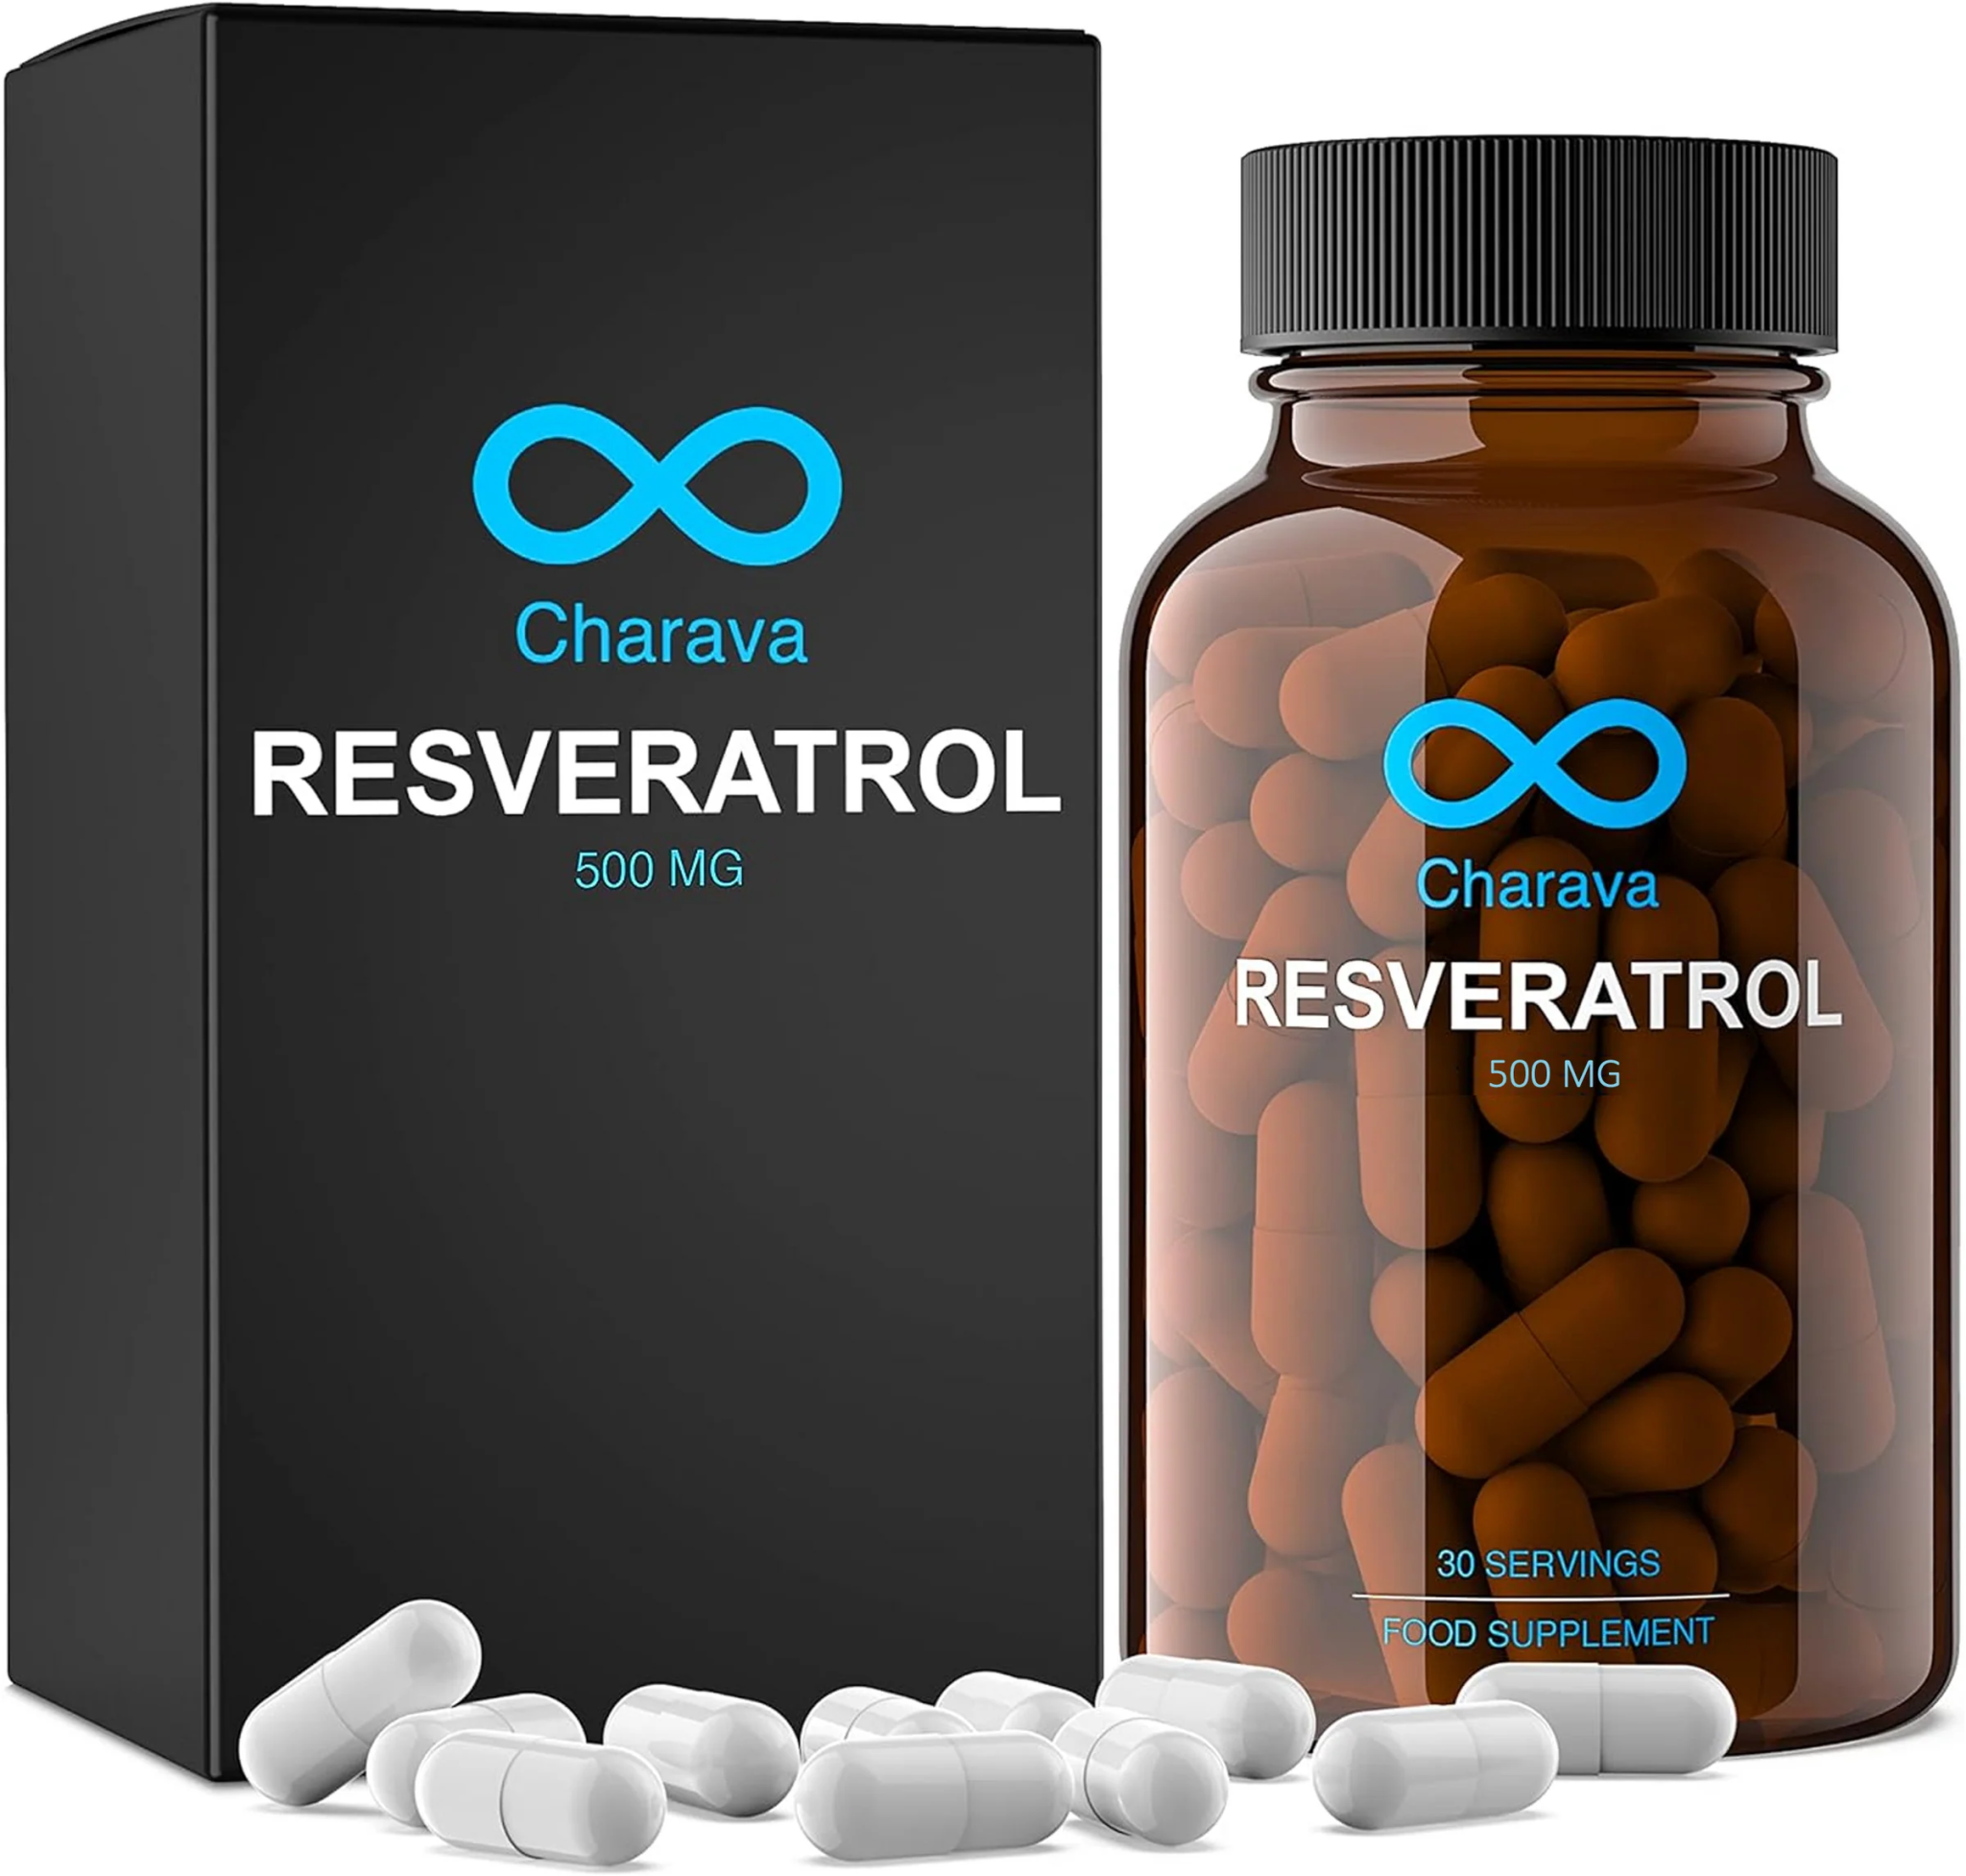 Chavara Resveratrol 500mg, Resveratrol 500mg